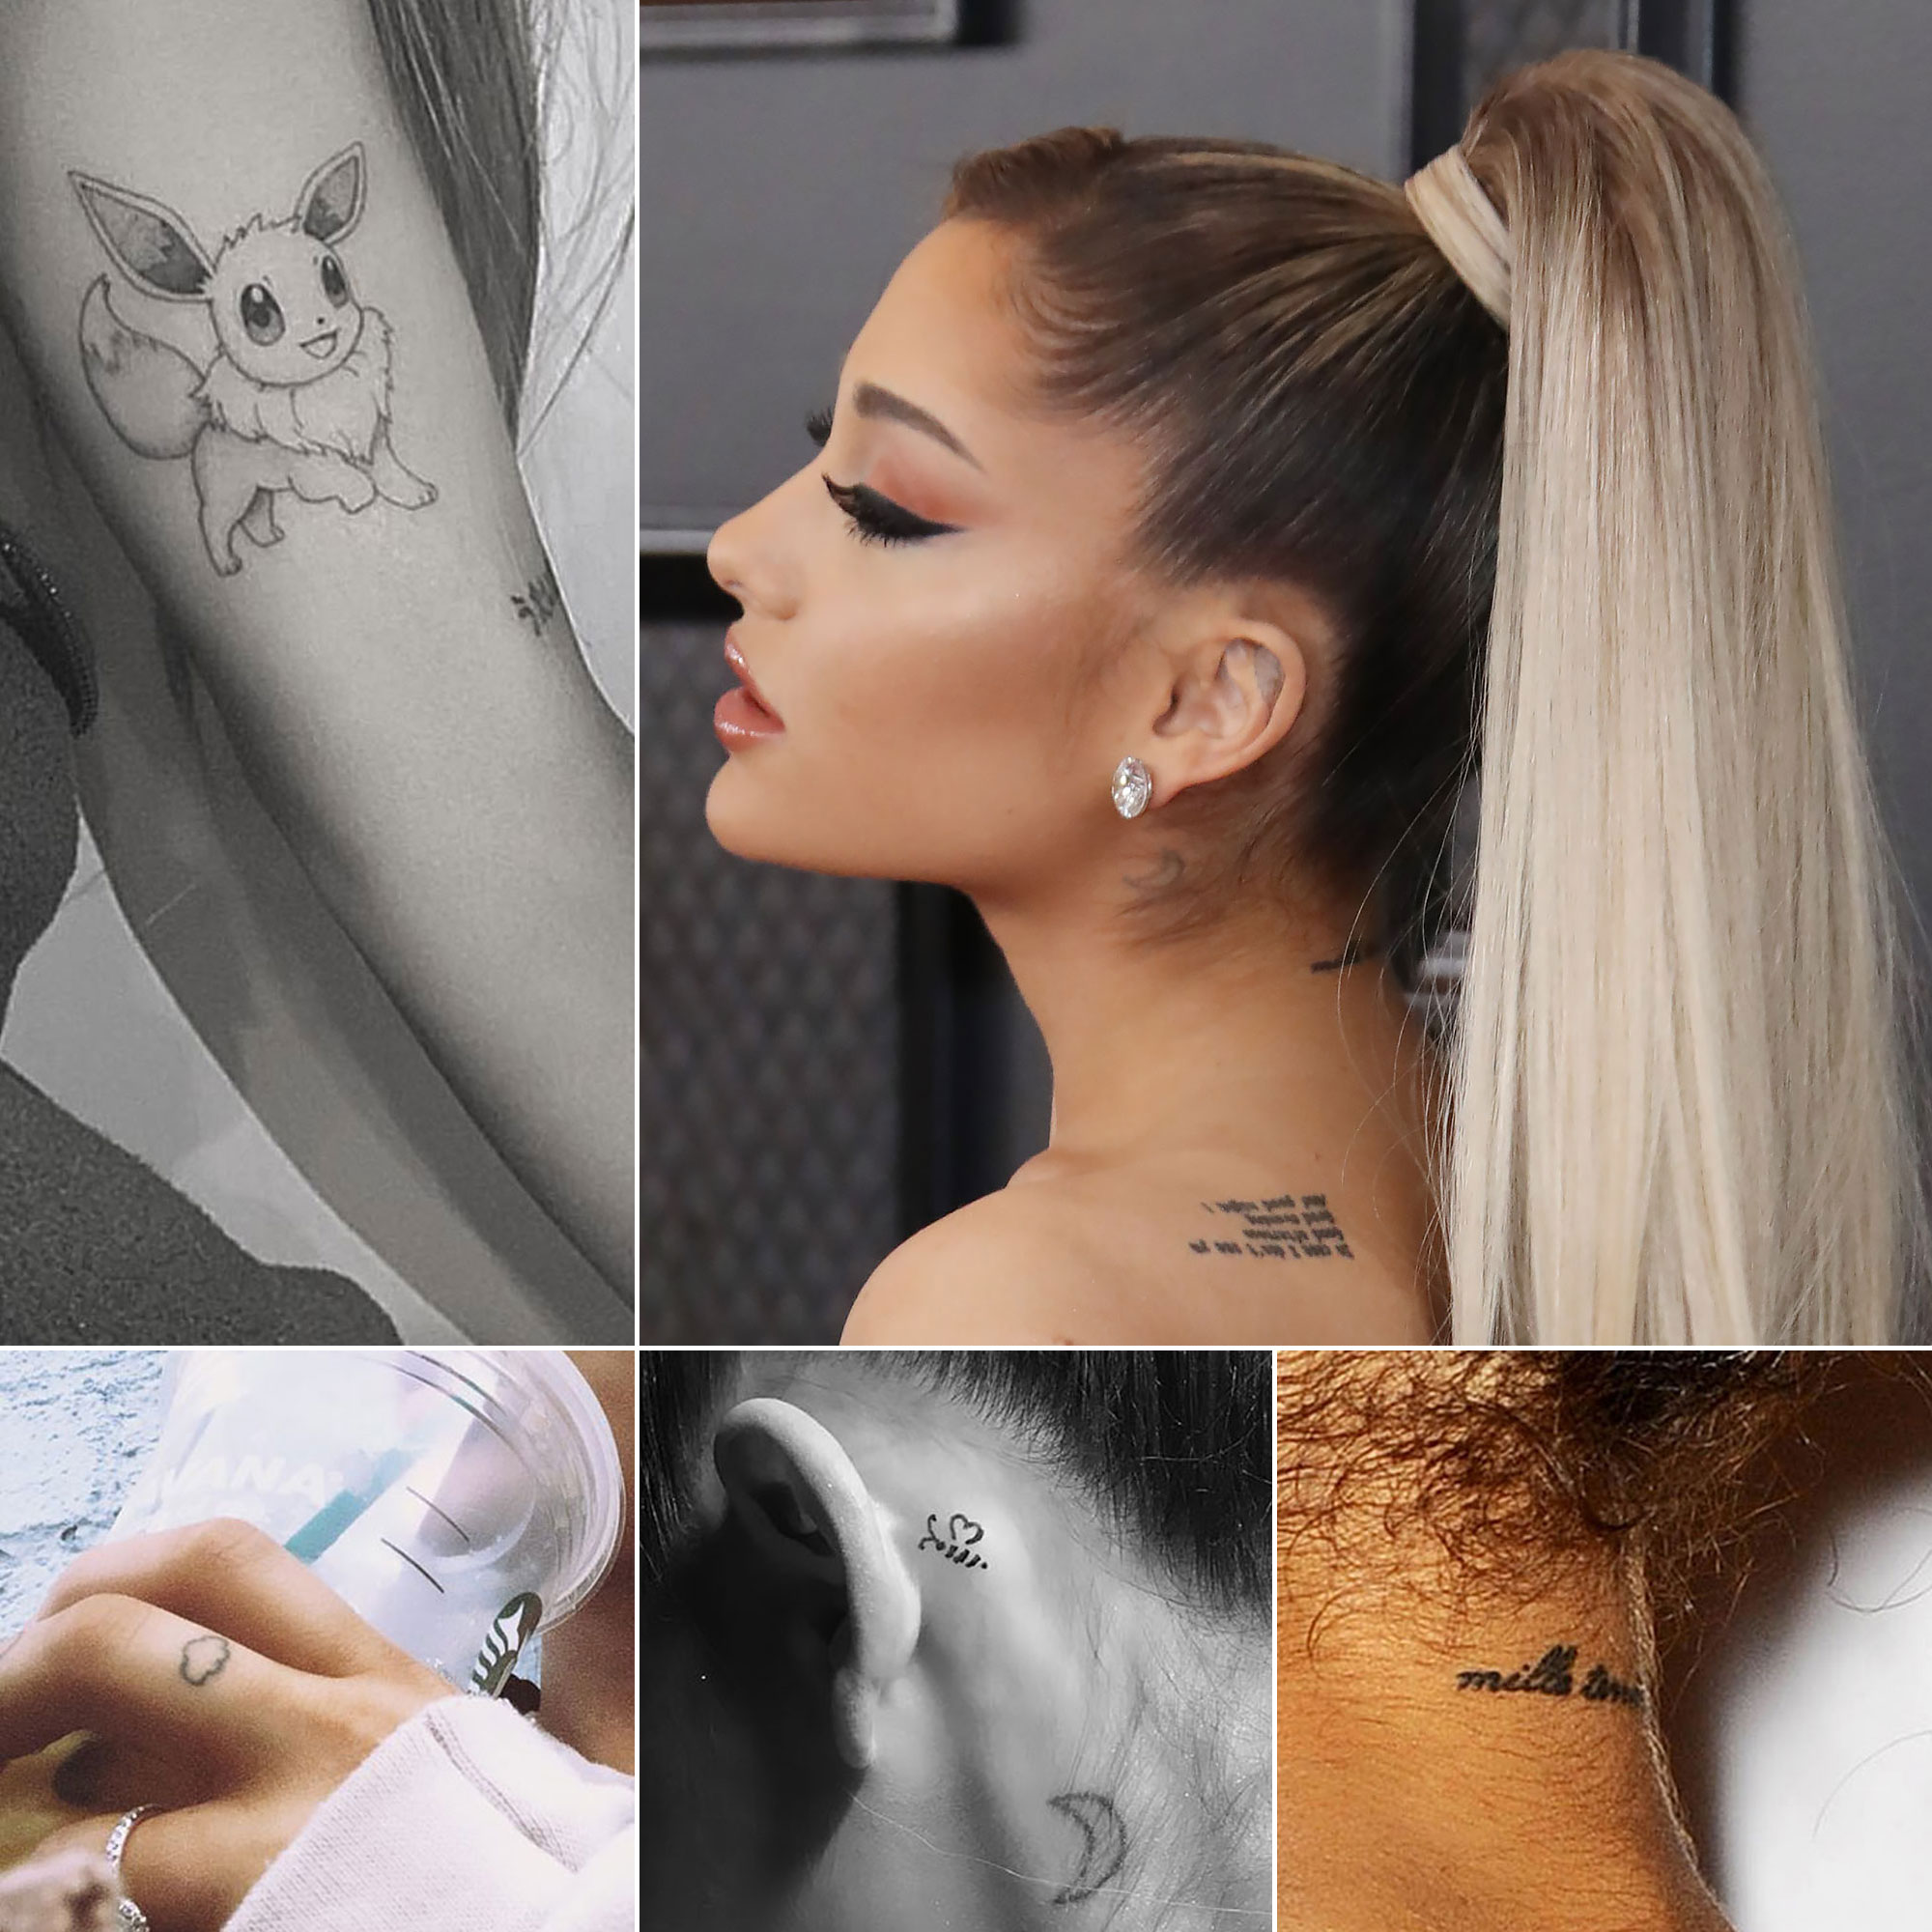 Ariana Grande Got Her Tattoo Misspelled - Twice! - Society19